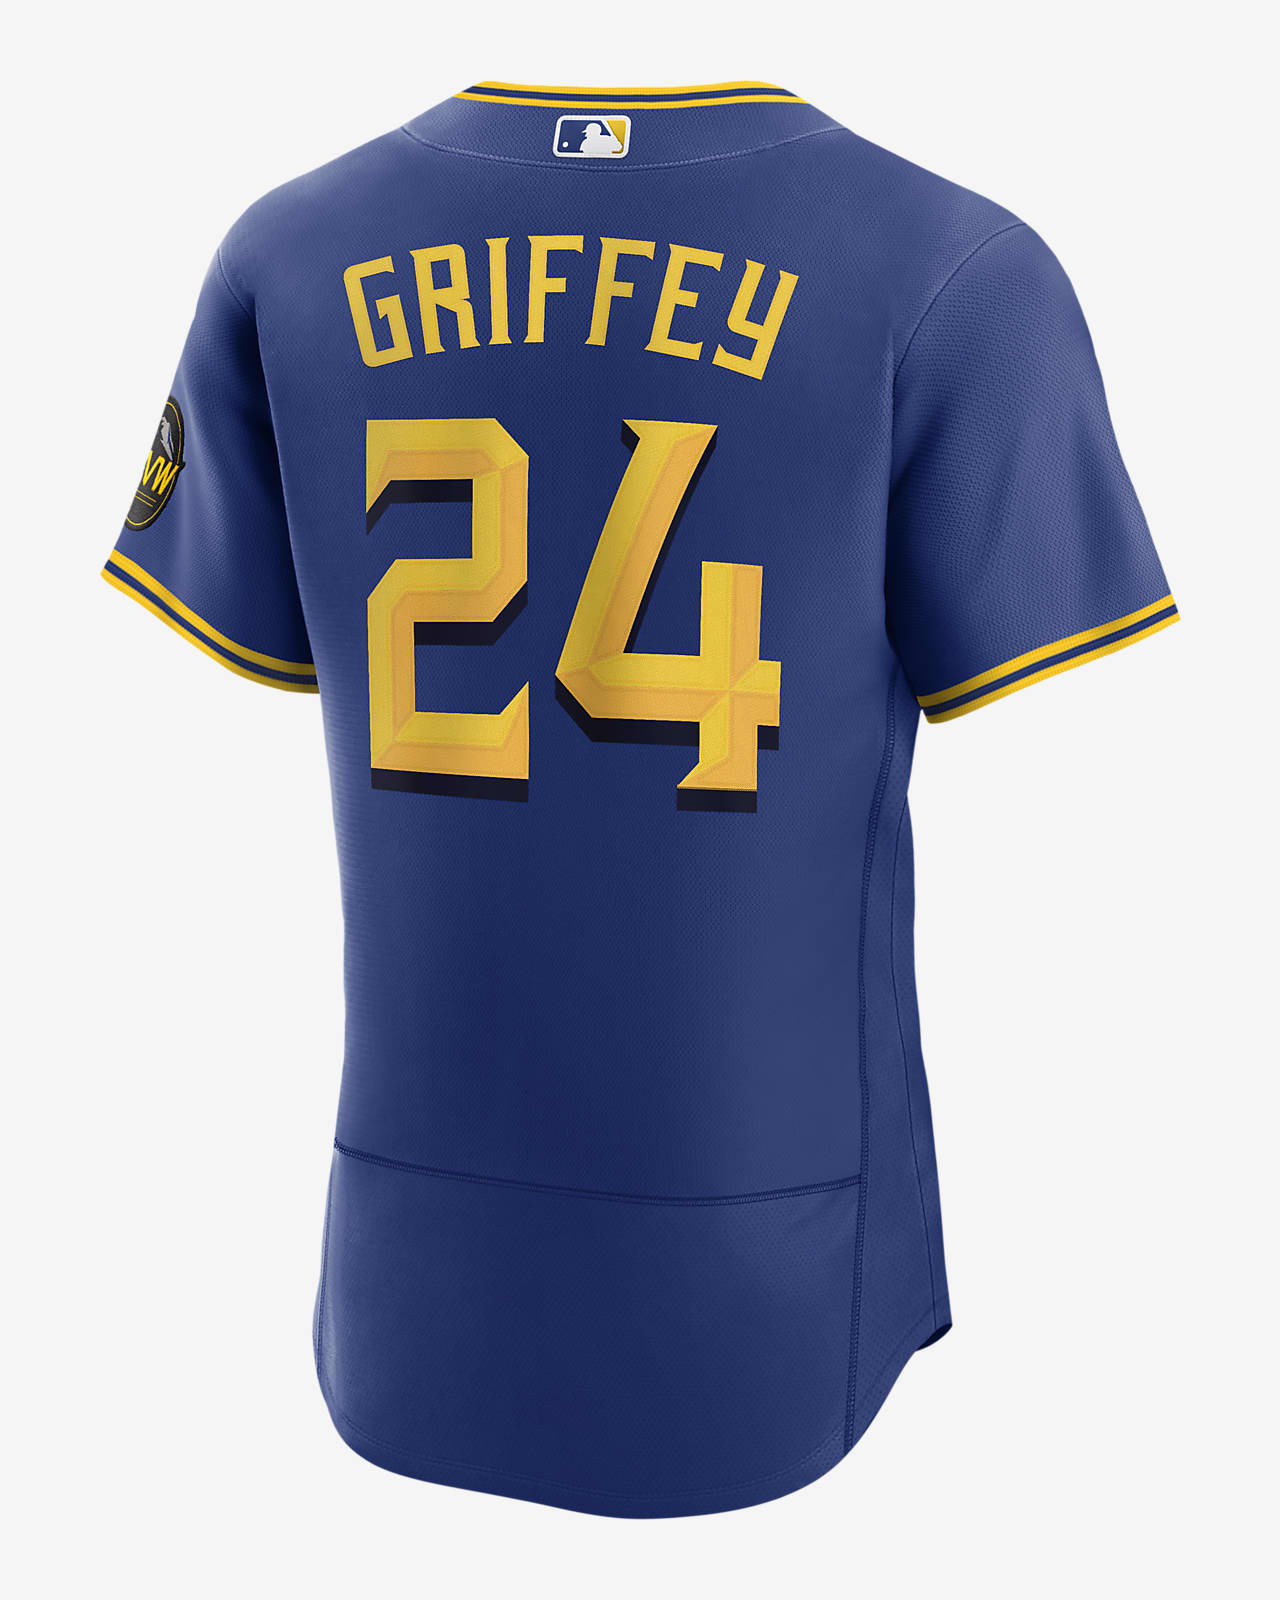 griffey jersey